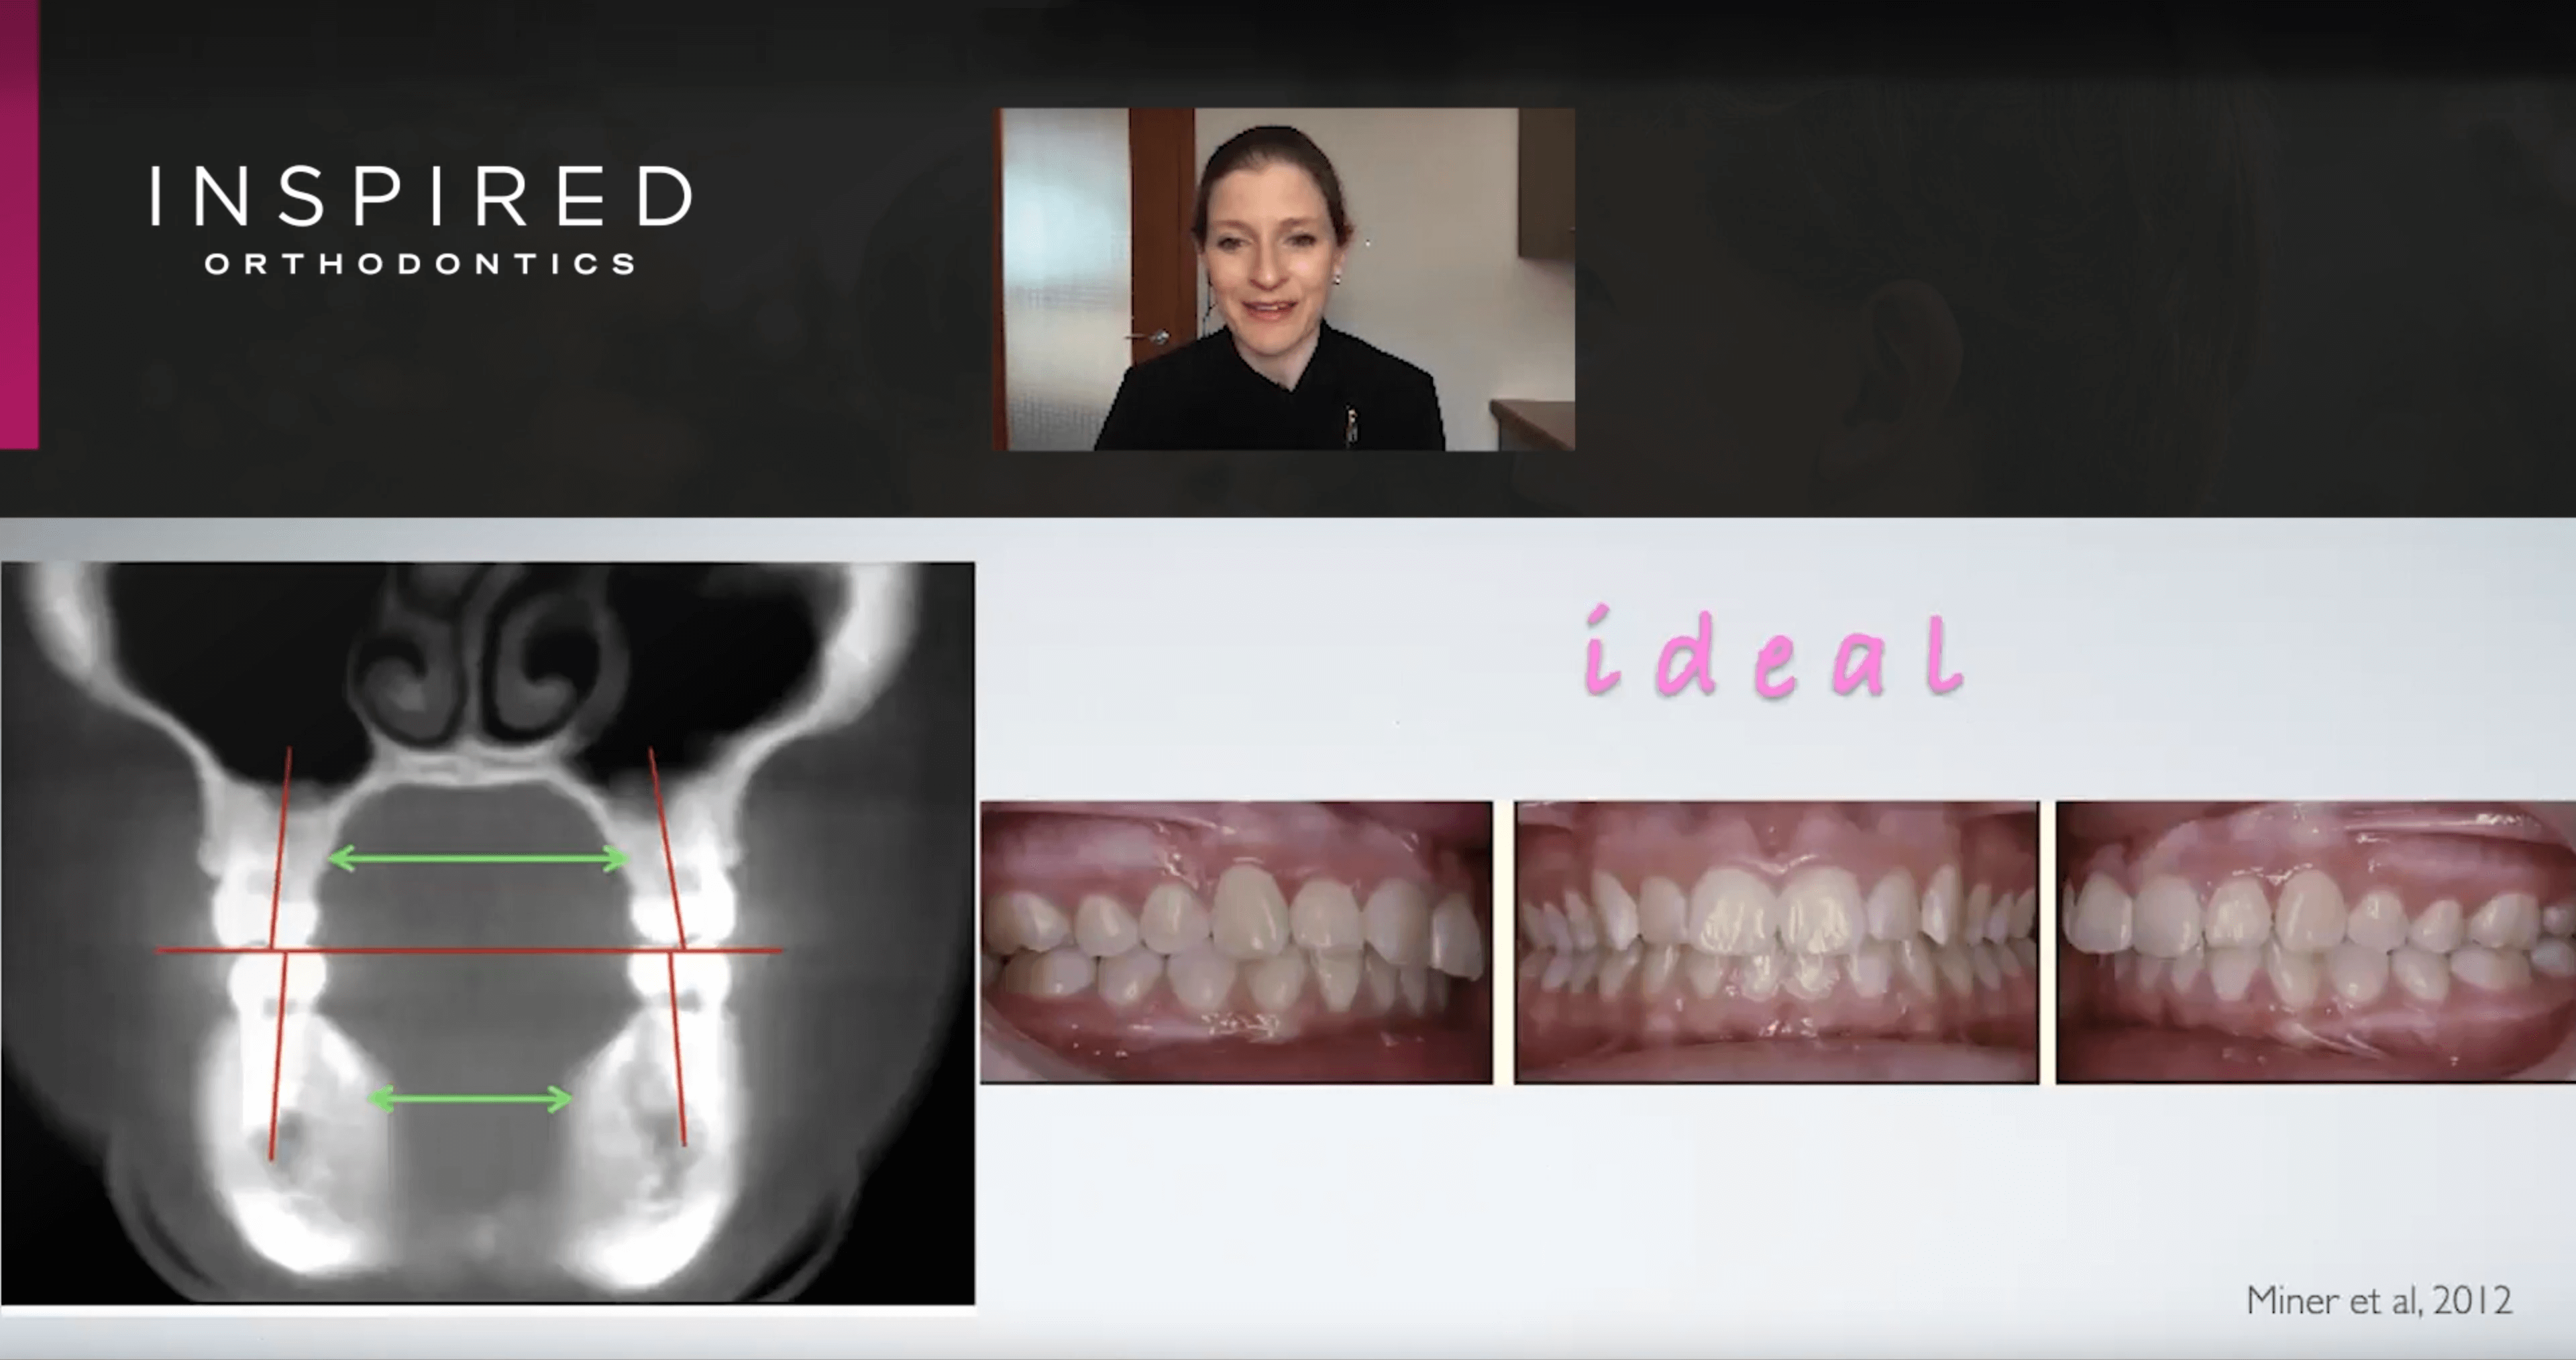 Considering Dental Arch Shape